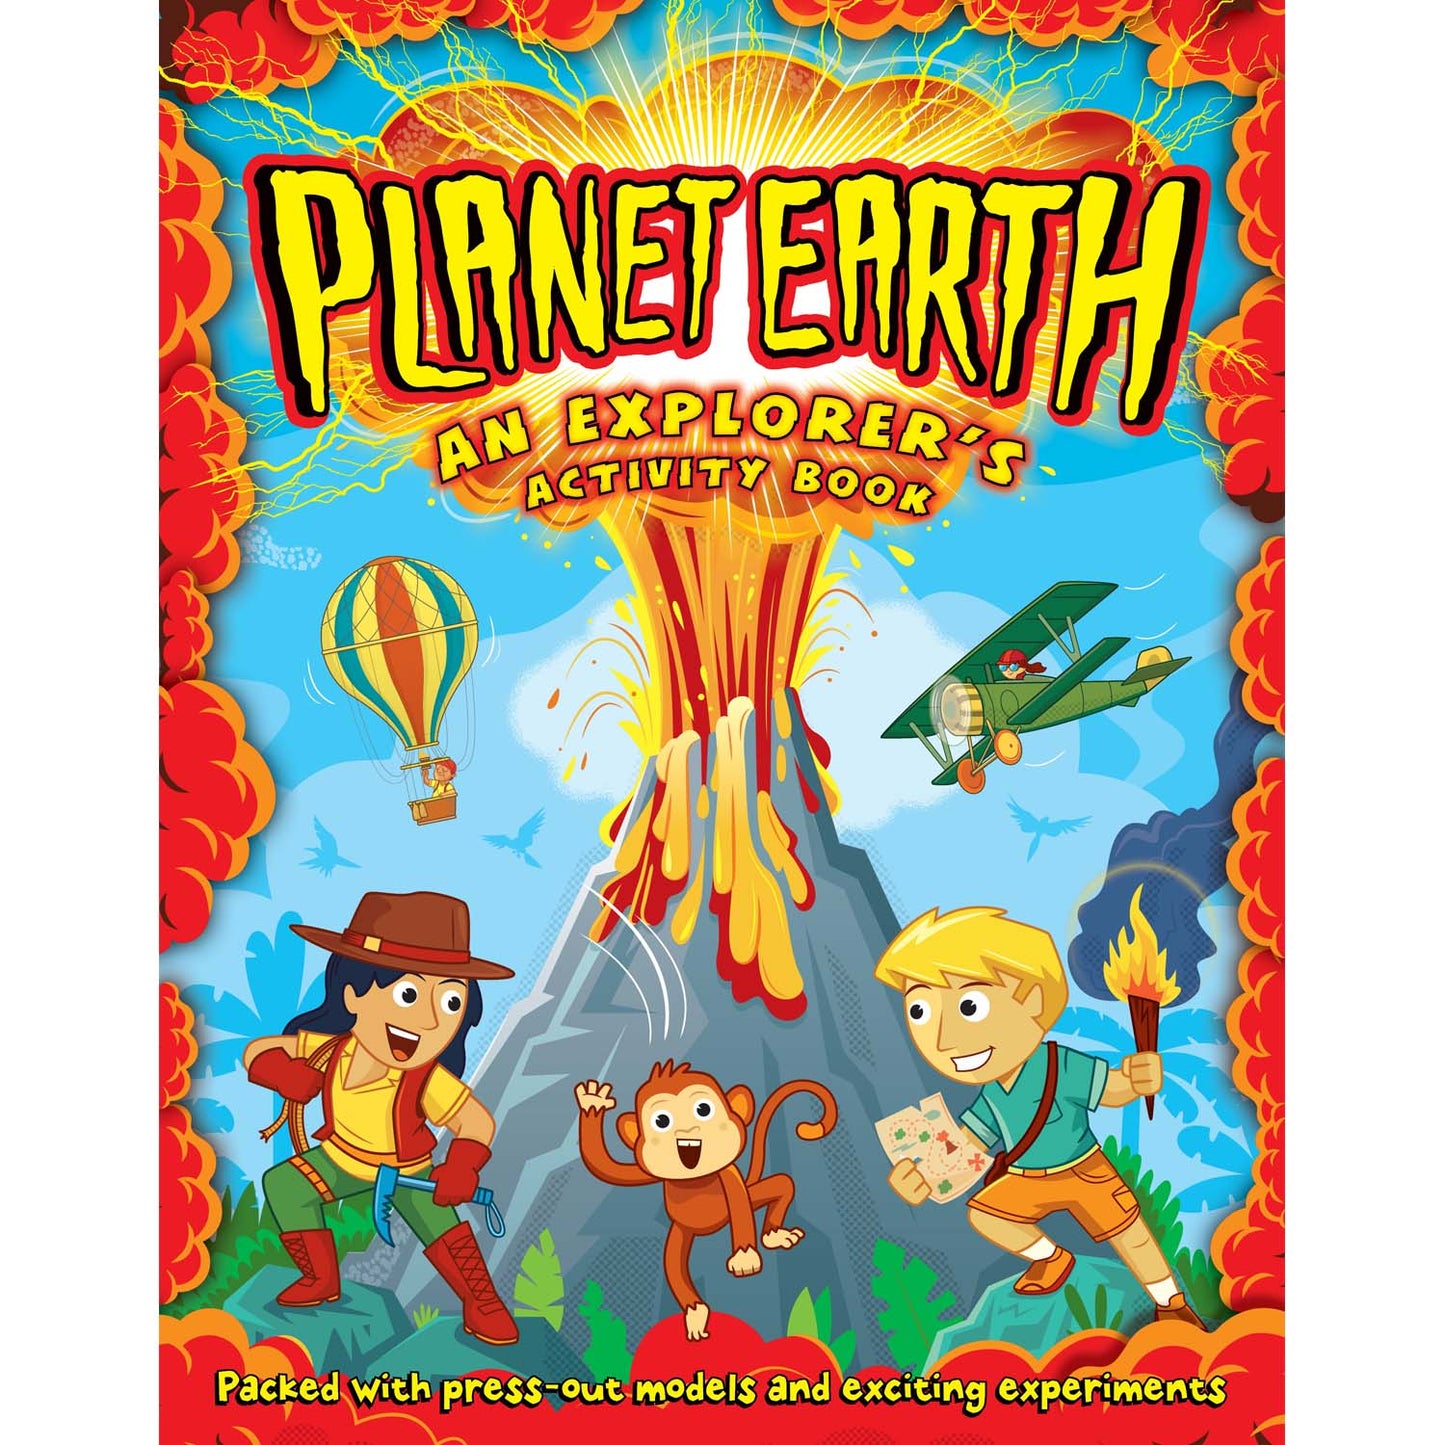 Planet Earth An Explorer's Activity Book